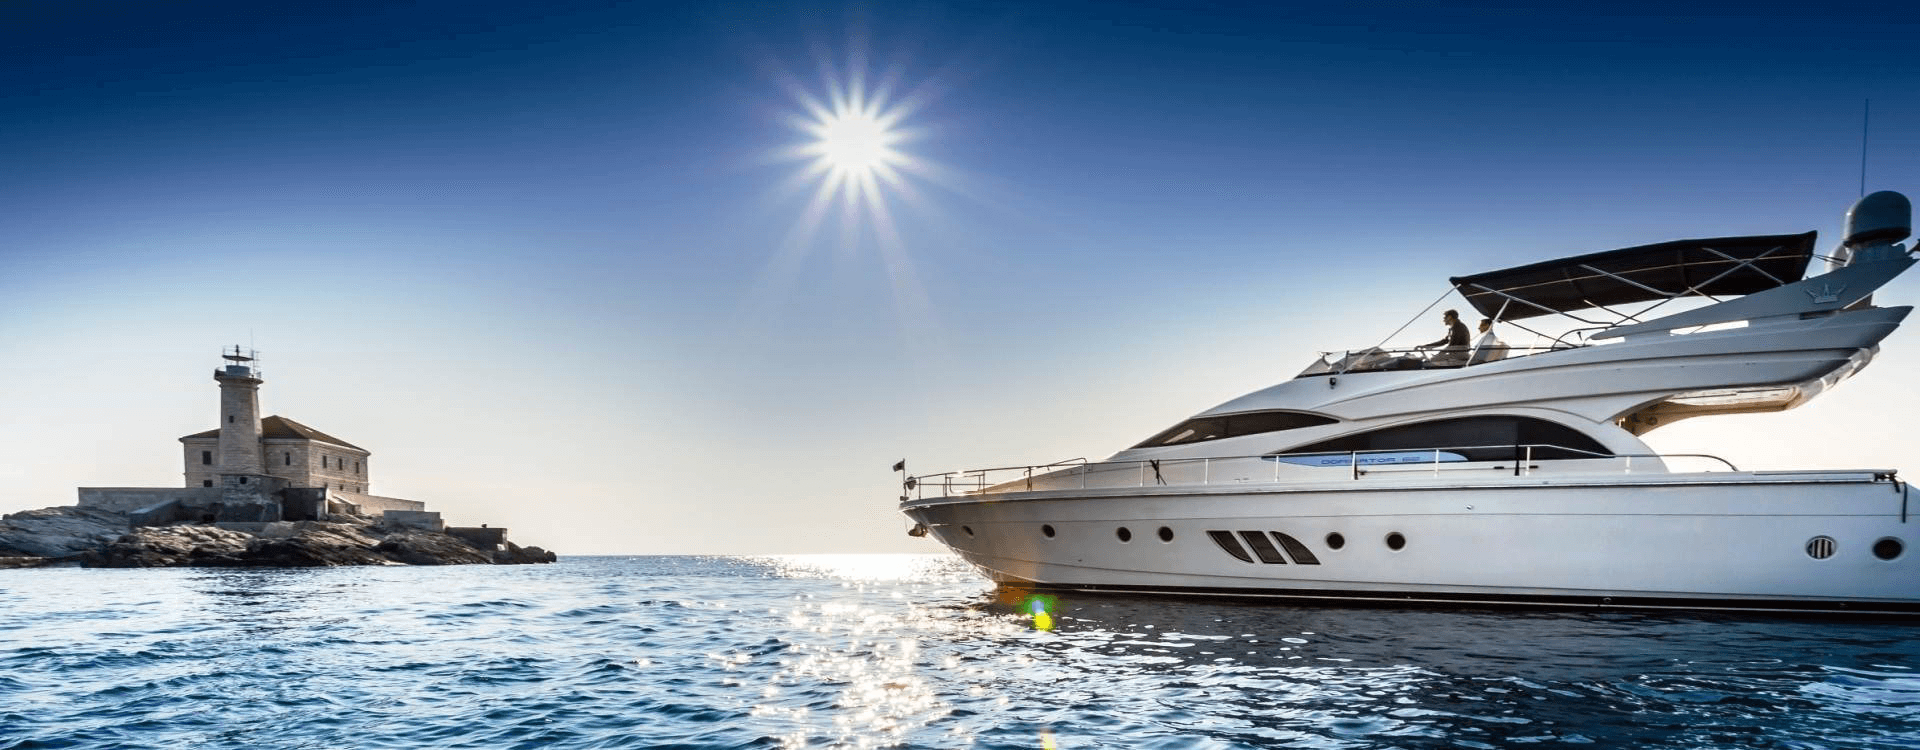 croatia yacht charter itinerary